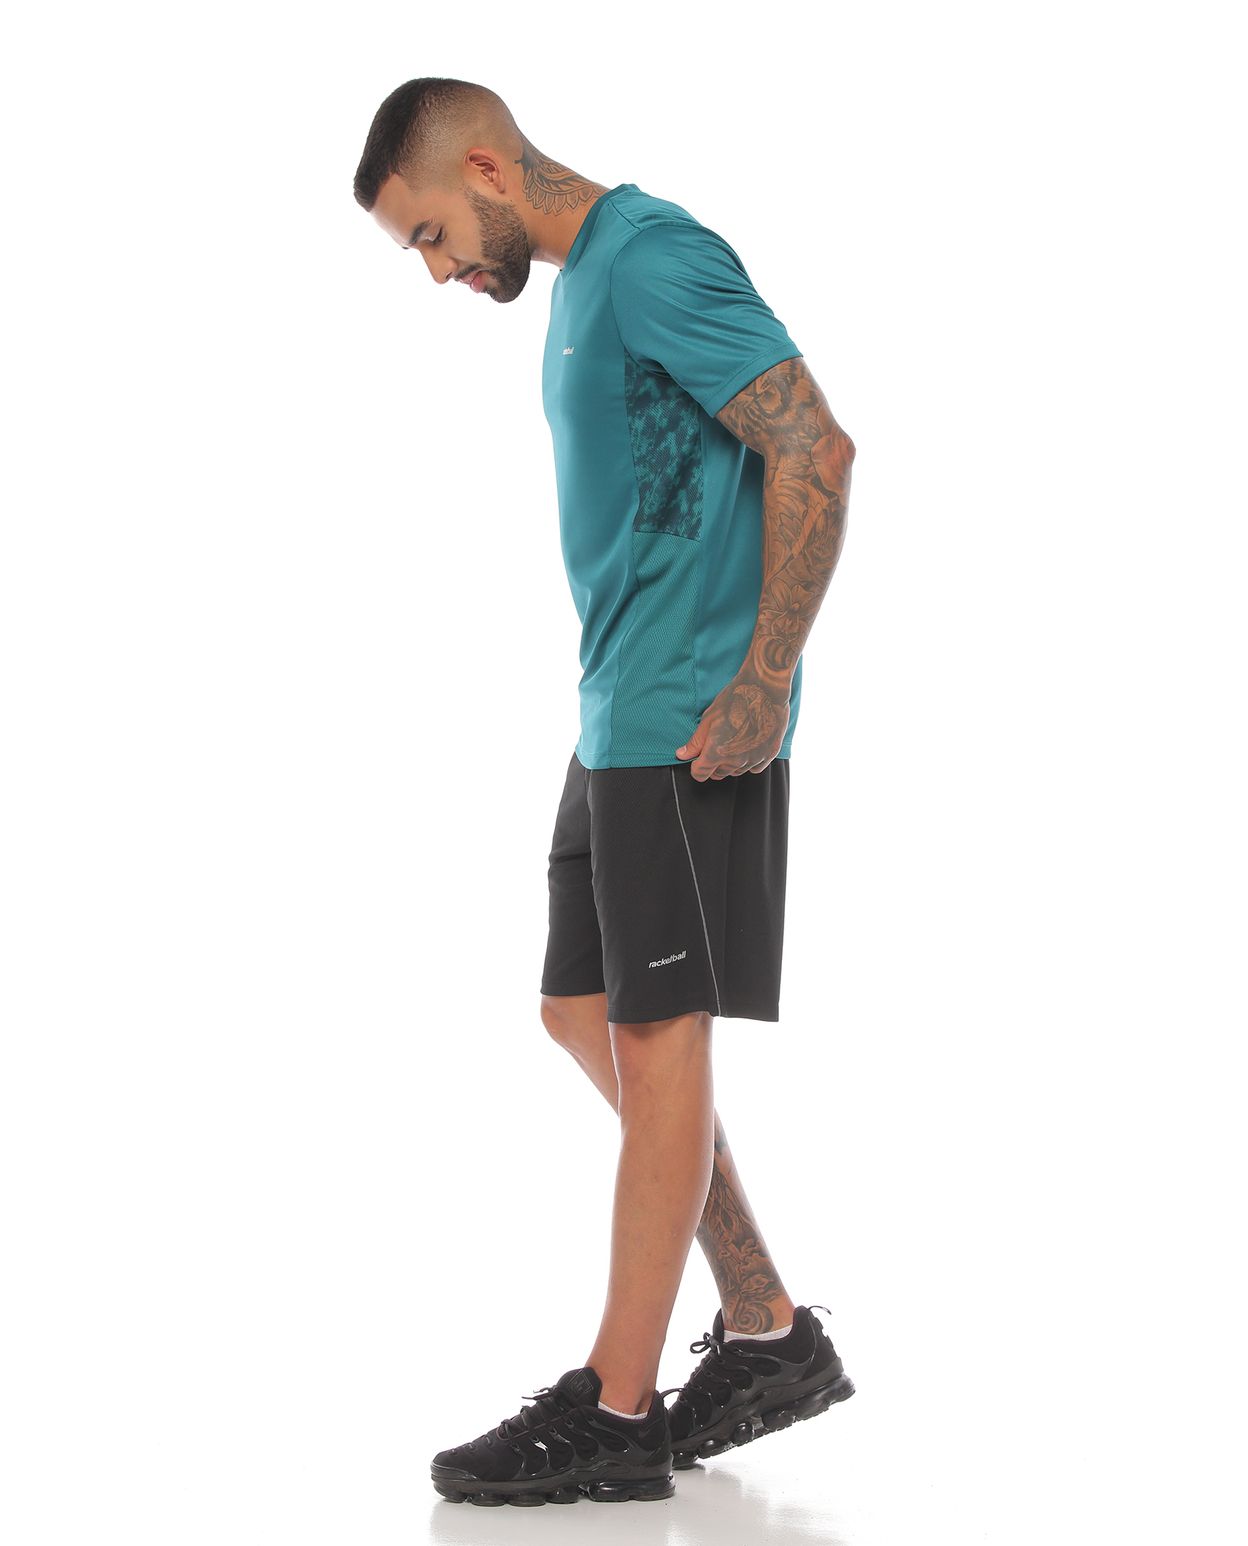 modelo con camiseta deportiva manga corta color verde y pantaloneta deportiva negra para hombre parte lateral izquierda